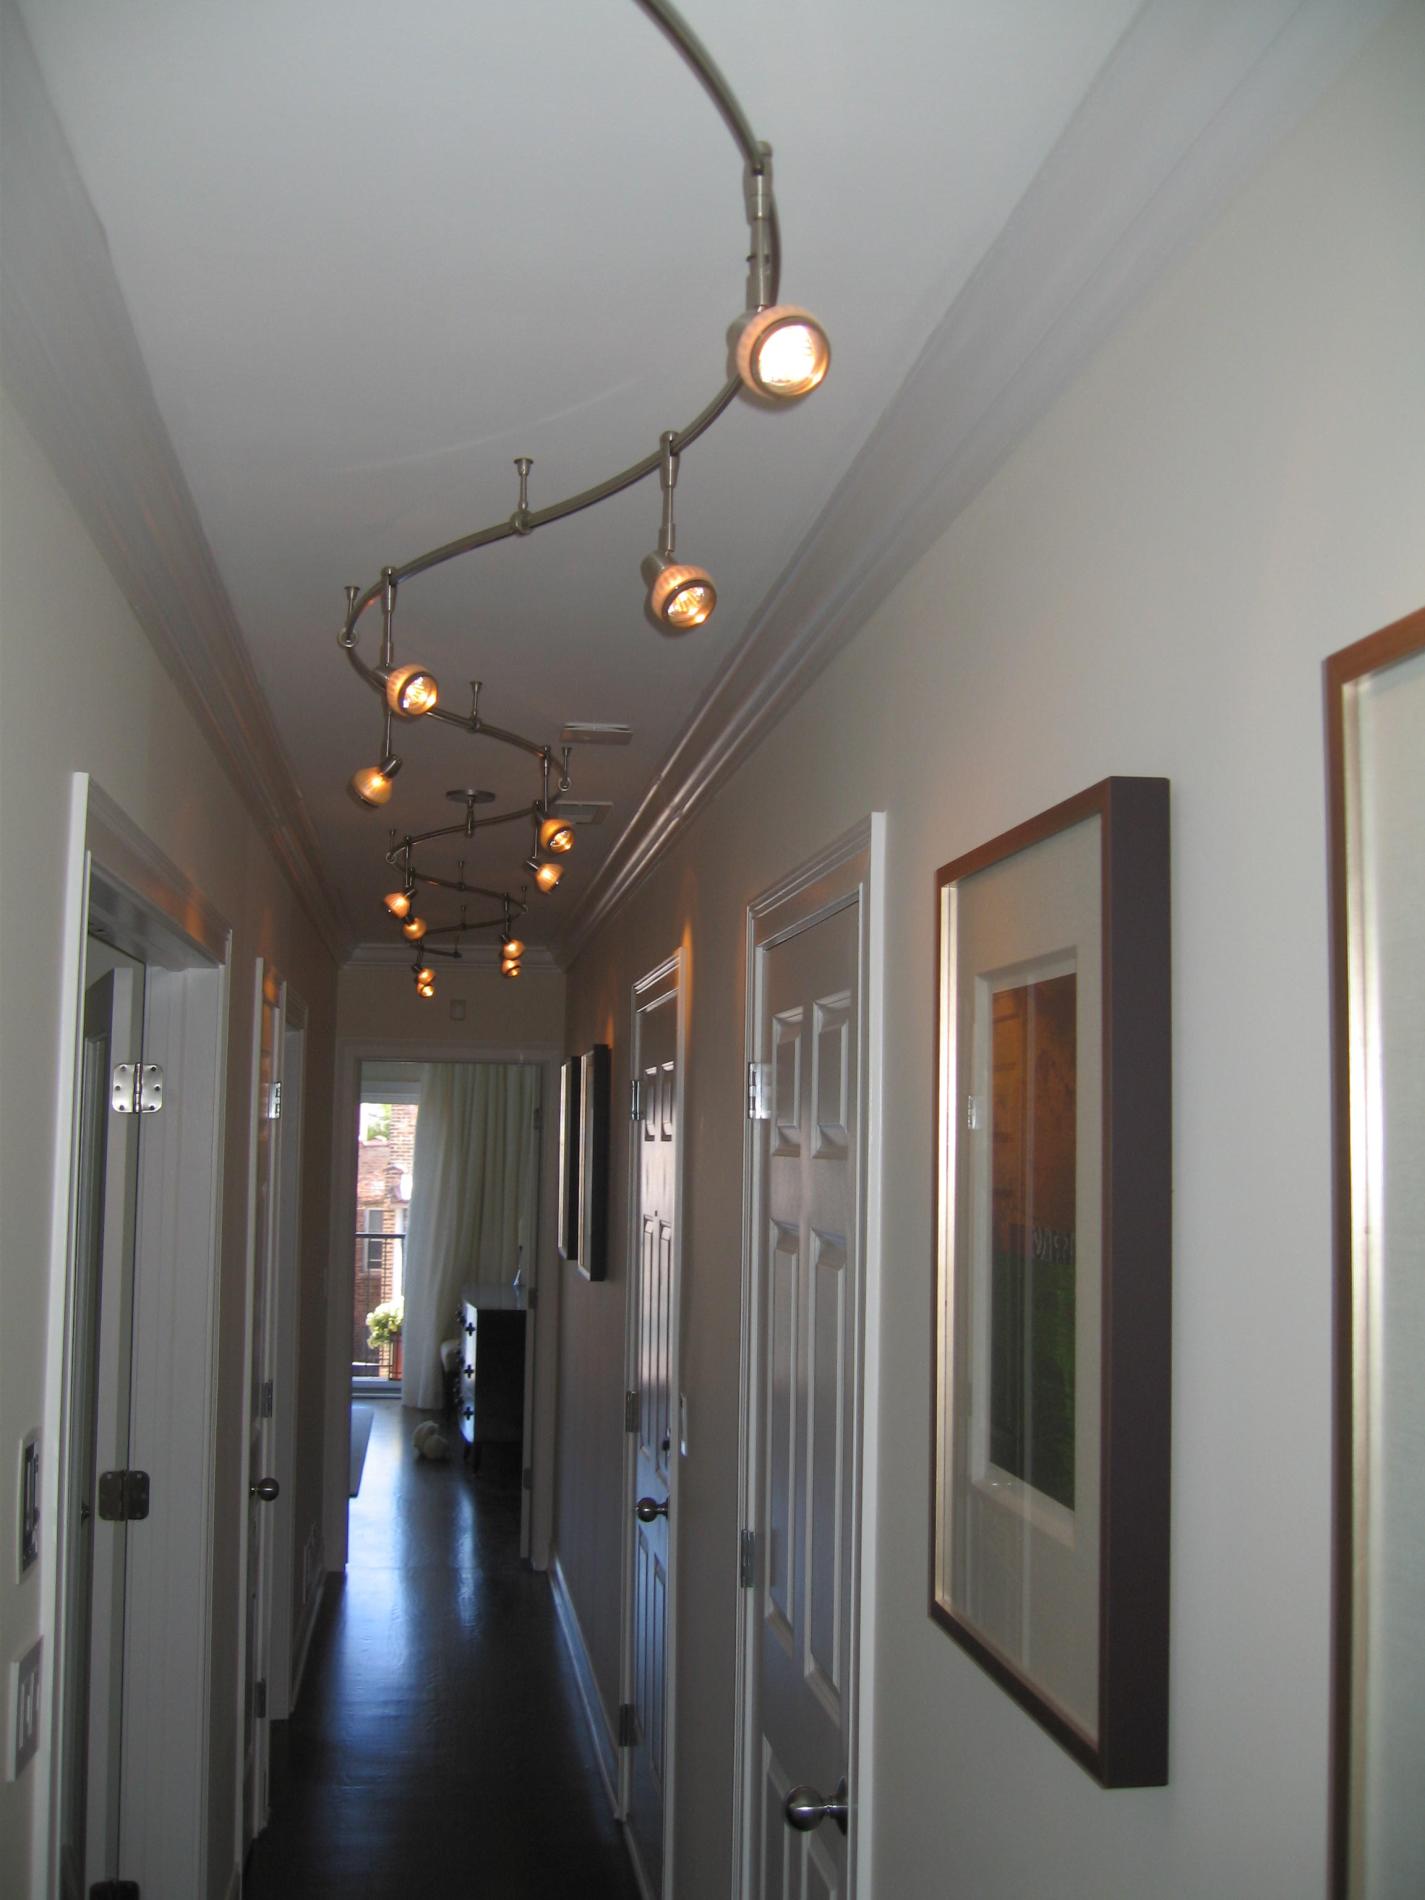 Entrance Hallway Lighting: Illuminating The Path Home